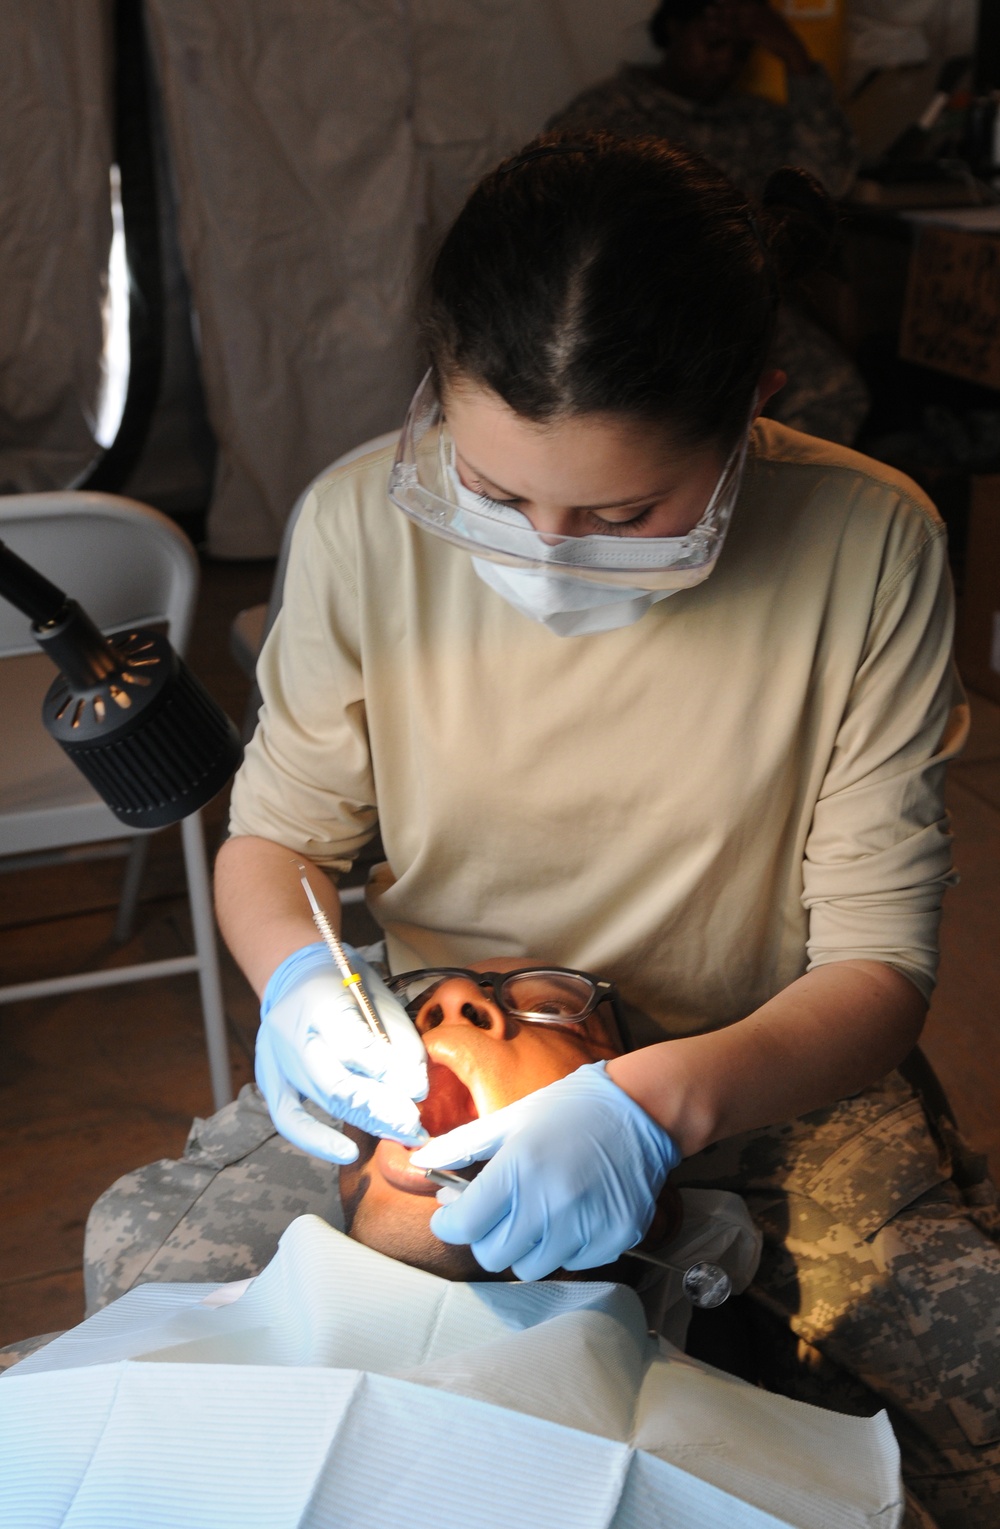 Dental readiness = combat readiness